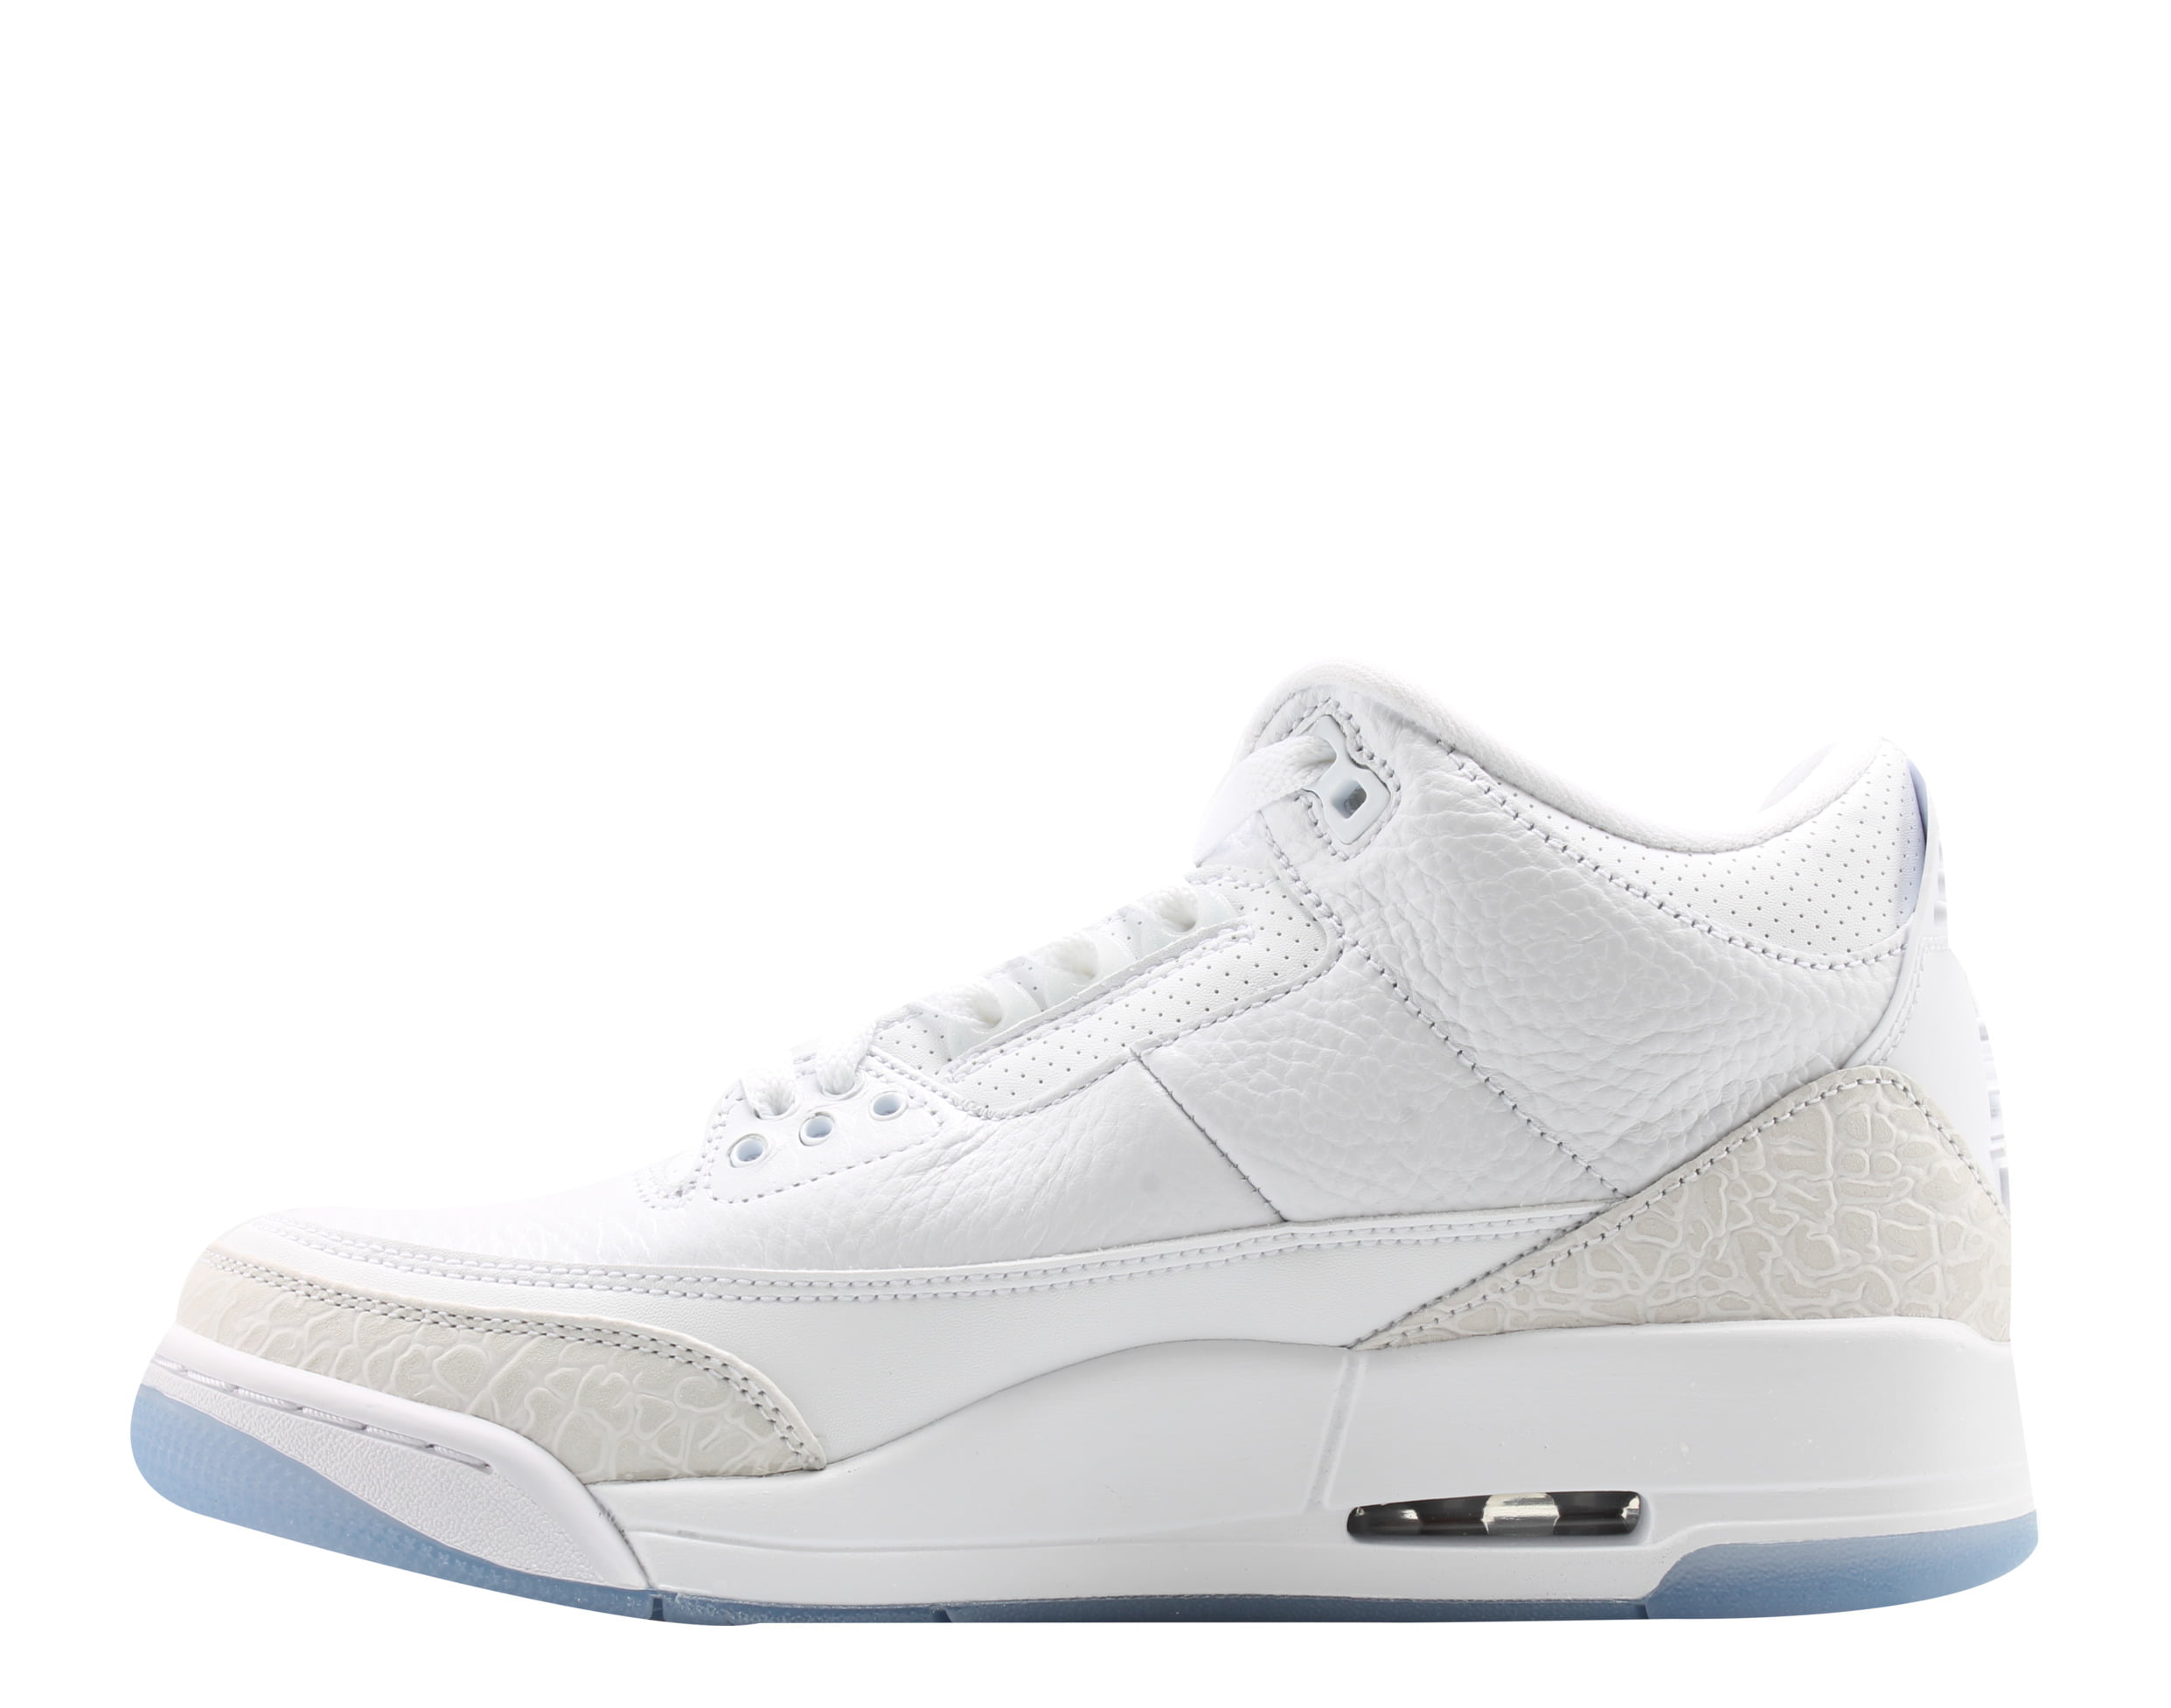 Air Jordan 3 Triple White 136064-111 Release Date - Sneaker Bar Detroit